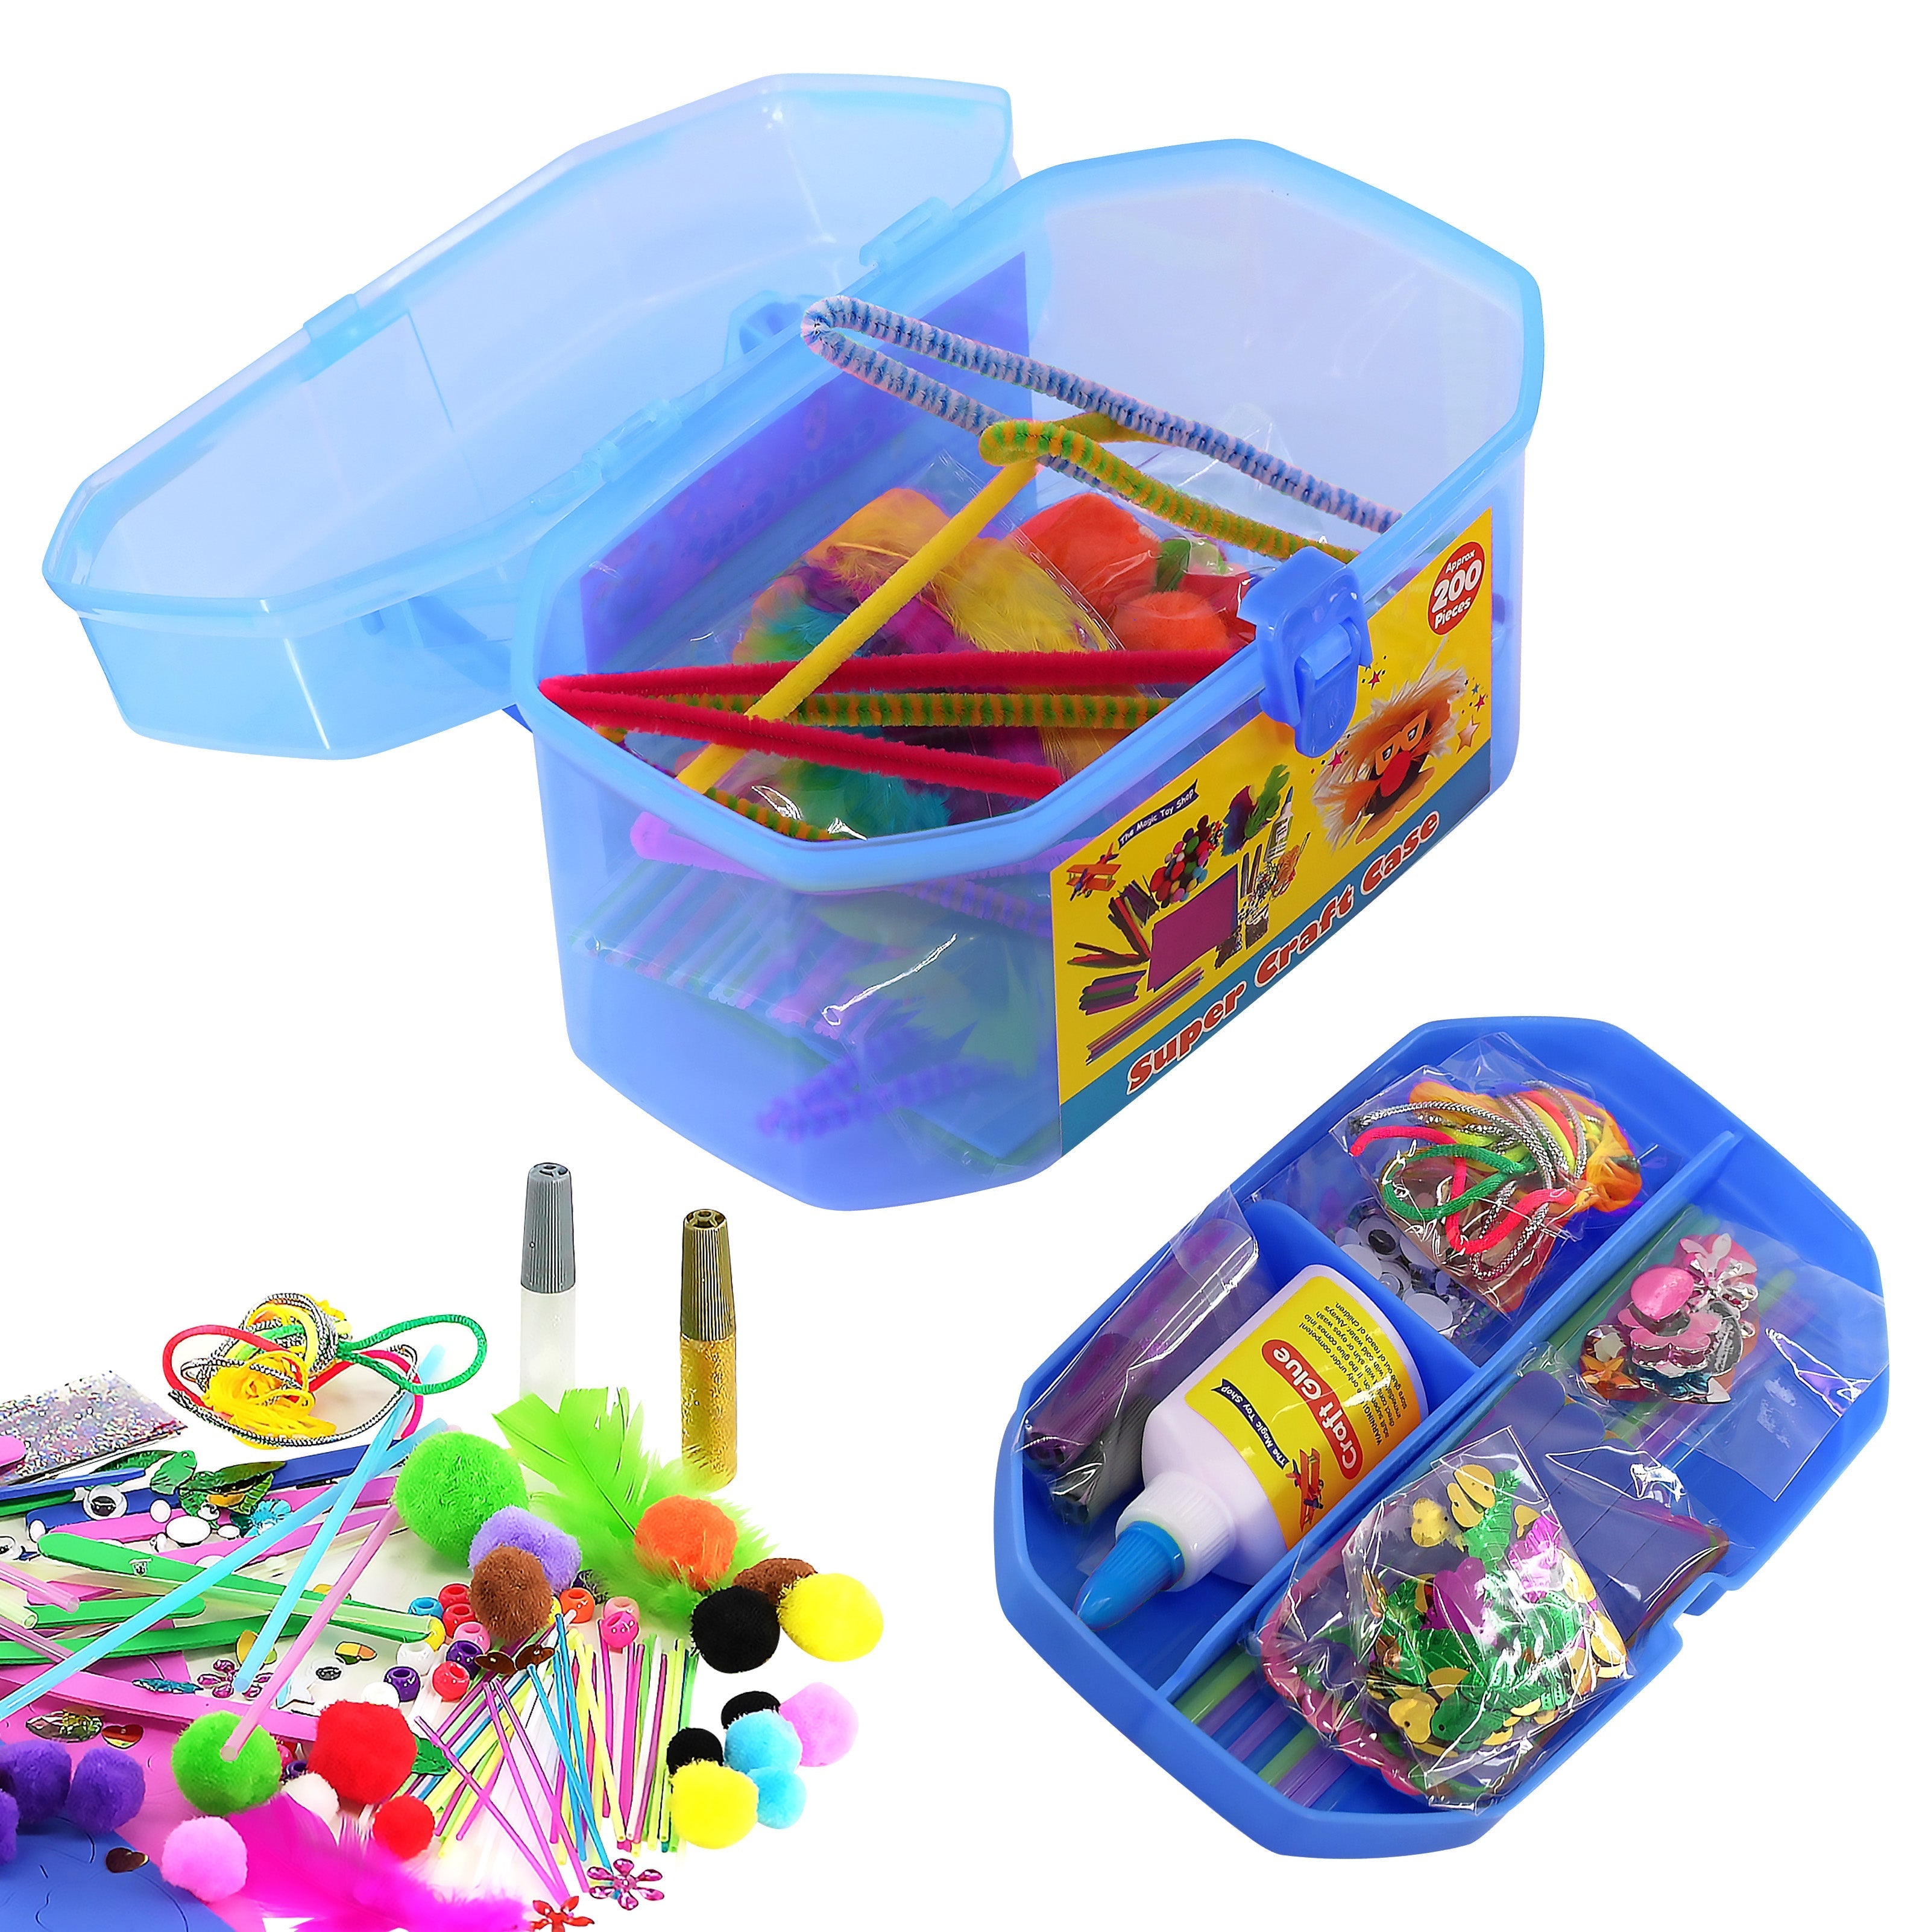 Blue Kids Super Craft Carry Case The Magic Toy Shop - The Magic Toy Shop